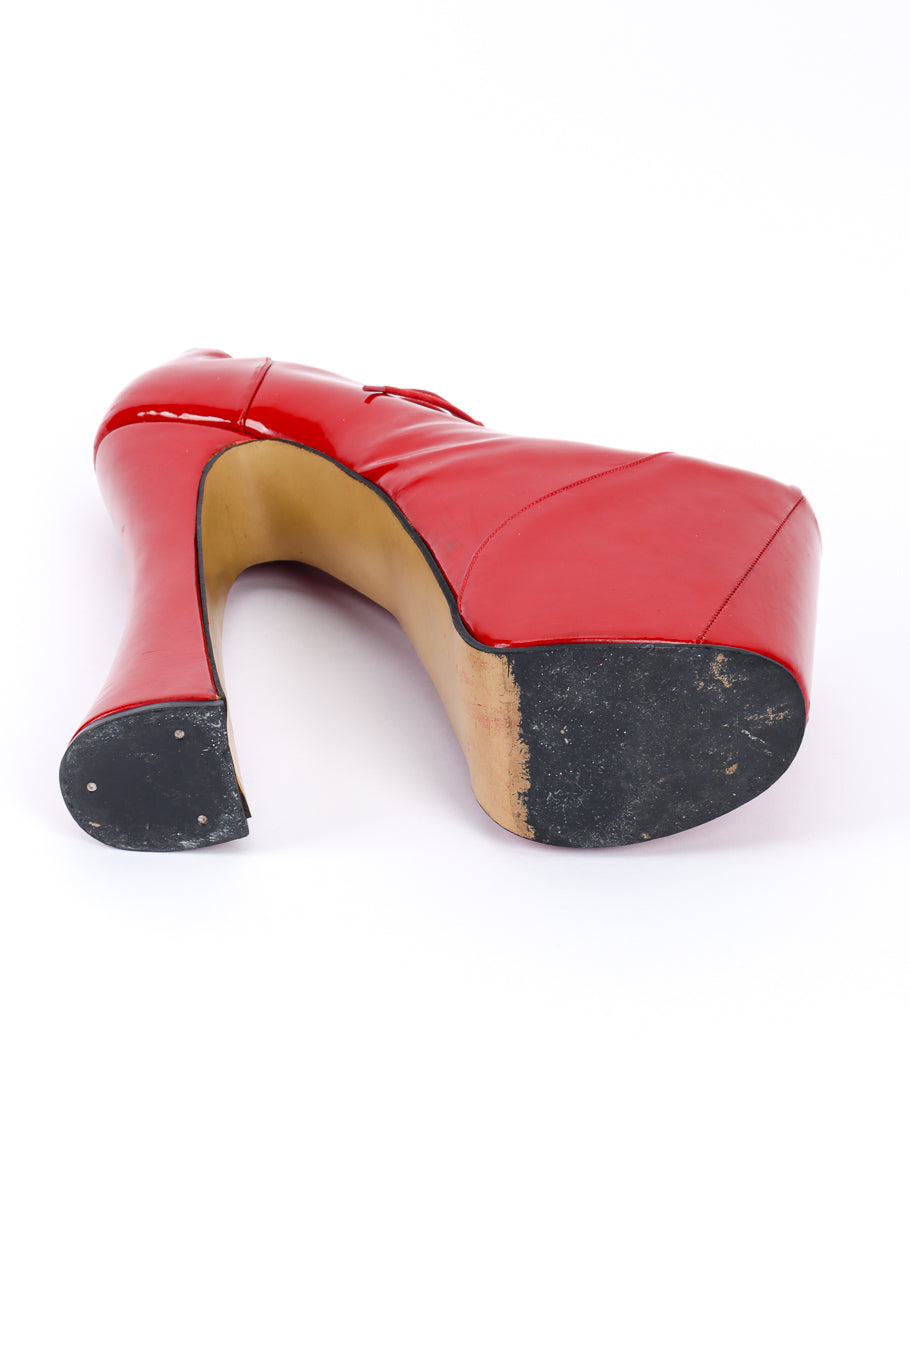 Vintage Vivienne Westwood 1993 F/W Patent Leather Super Elevated Ghillie Platforms left shoe outsole @recessla